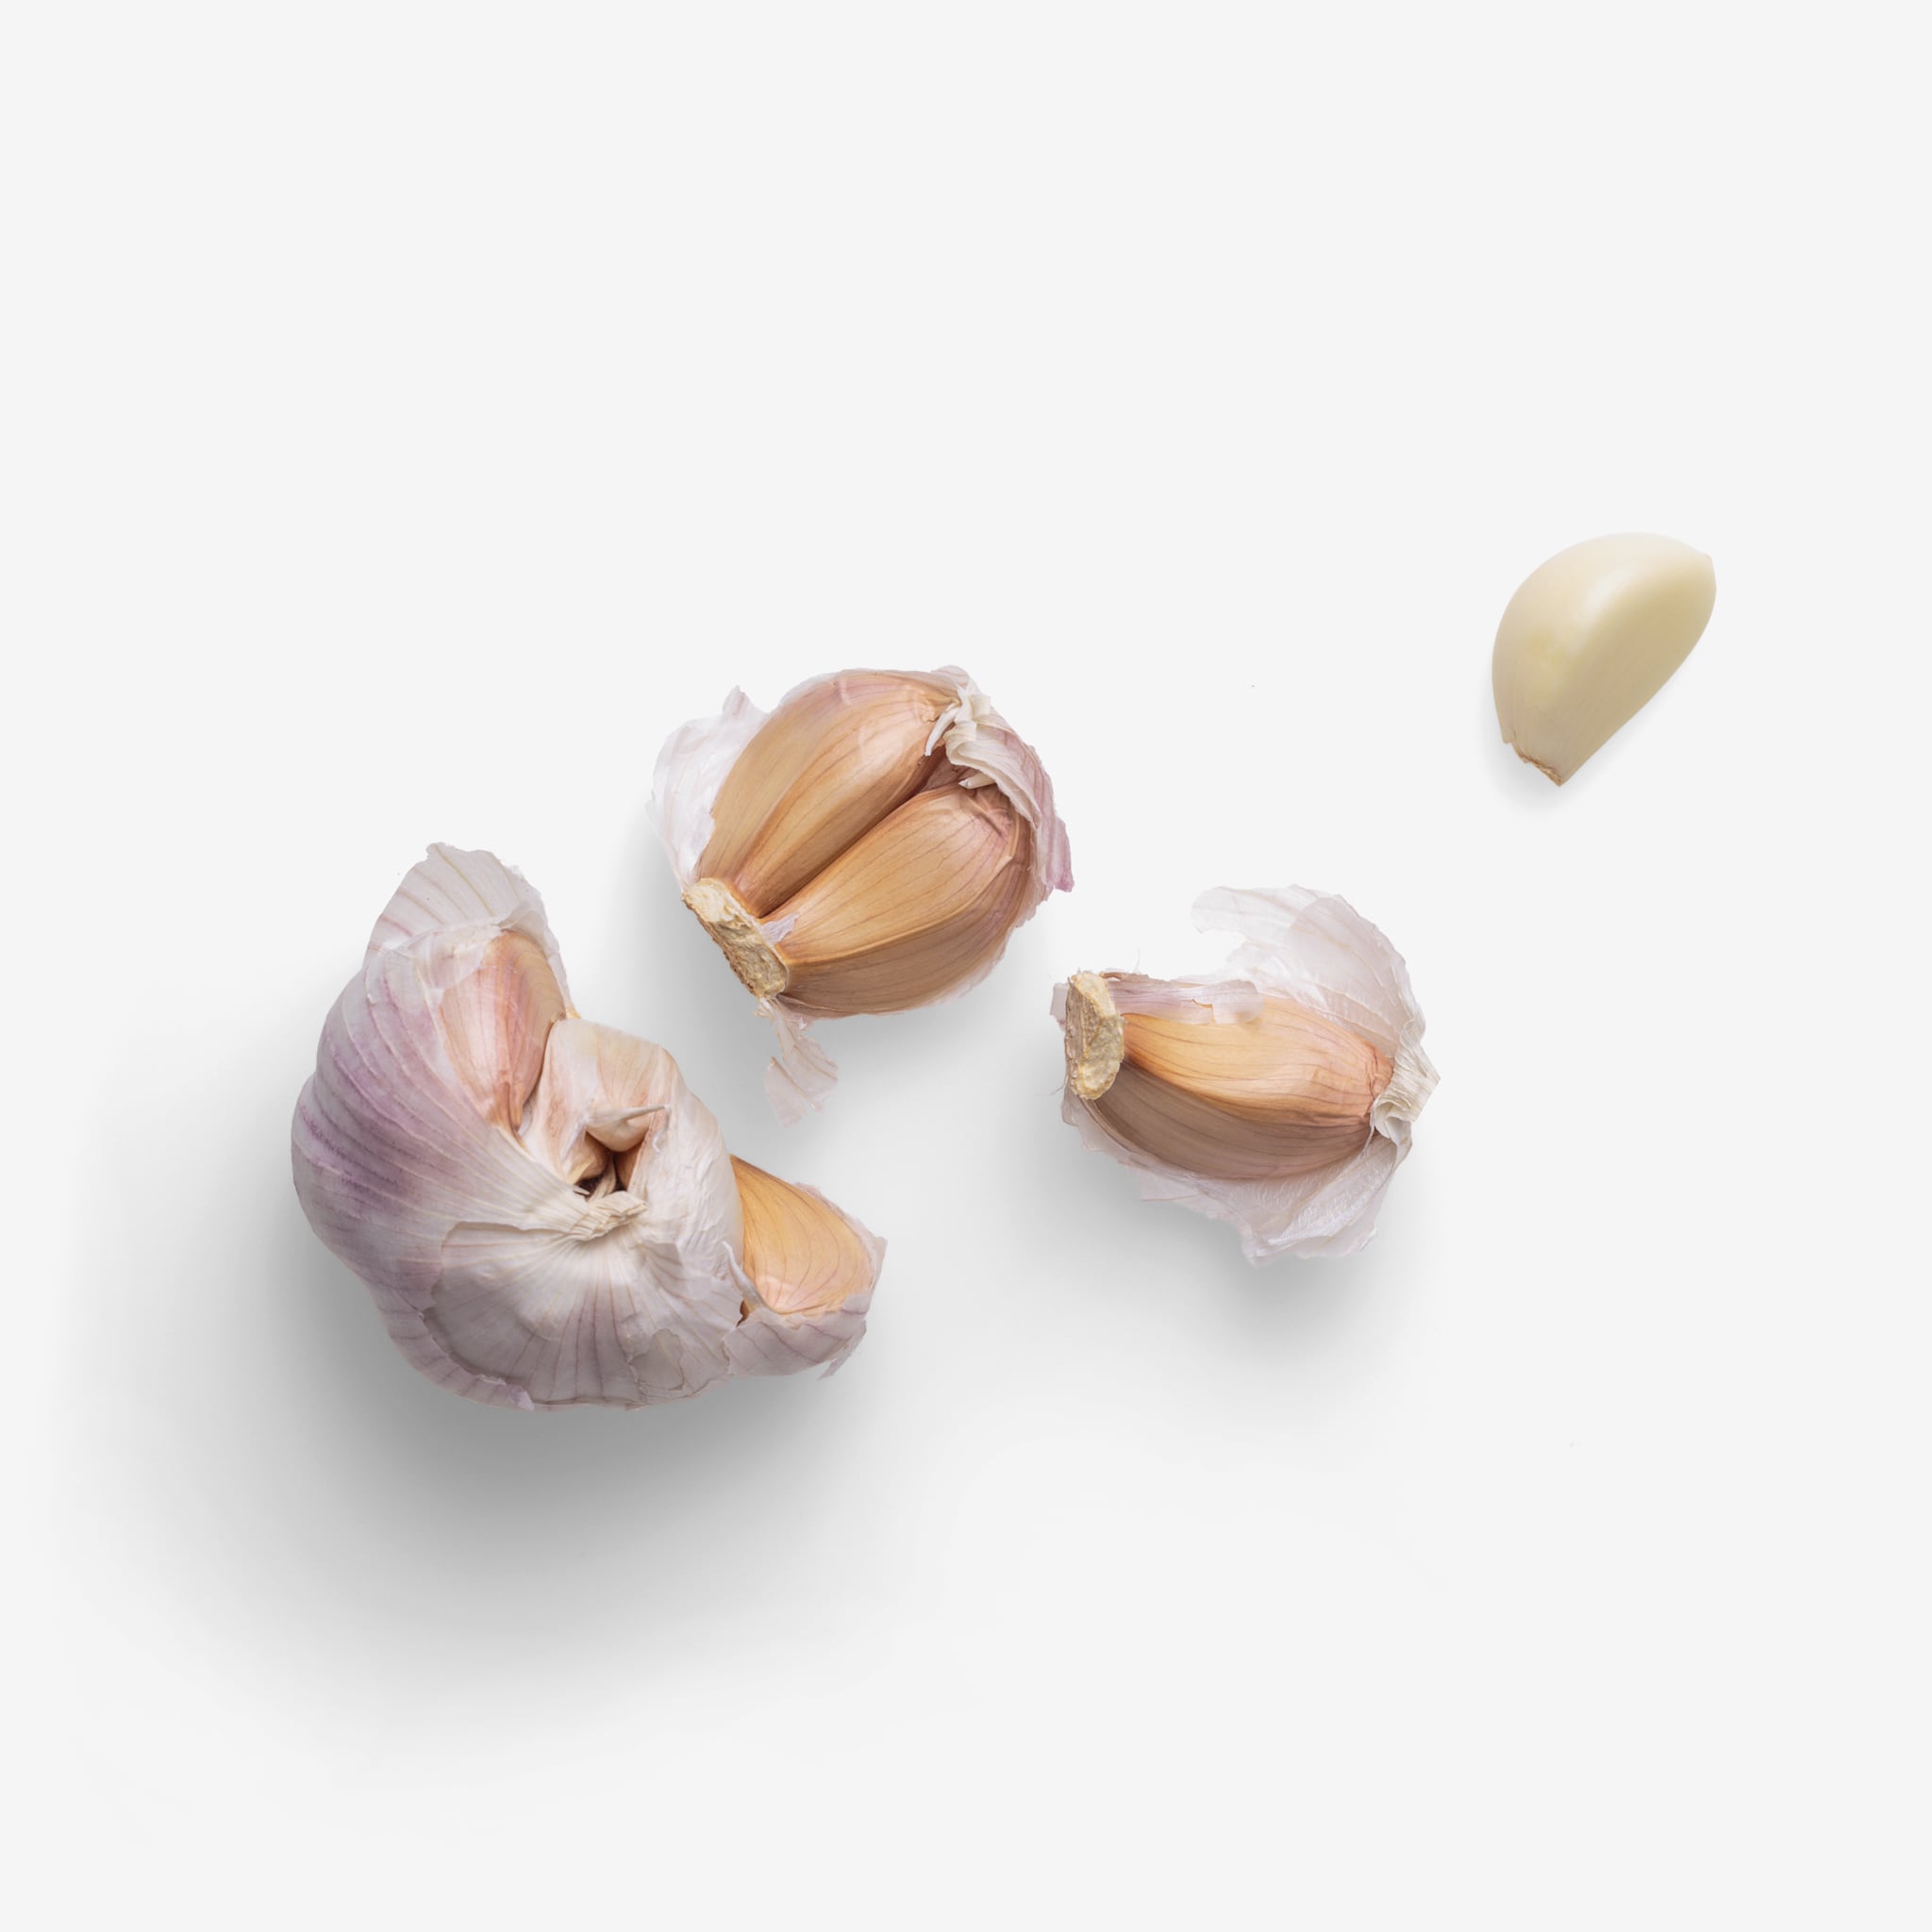 Garlic image with transparent background